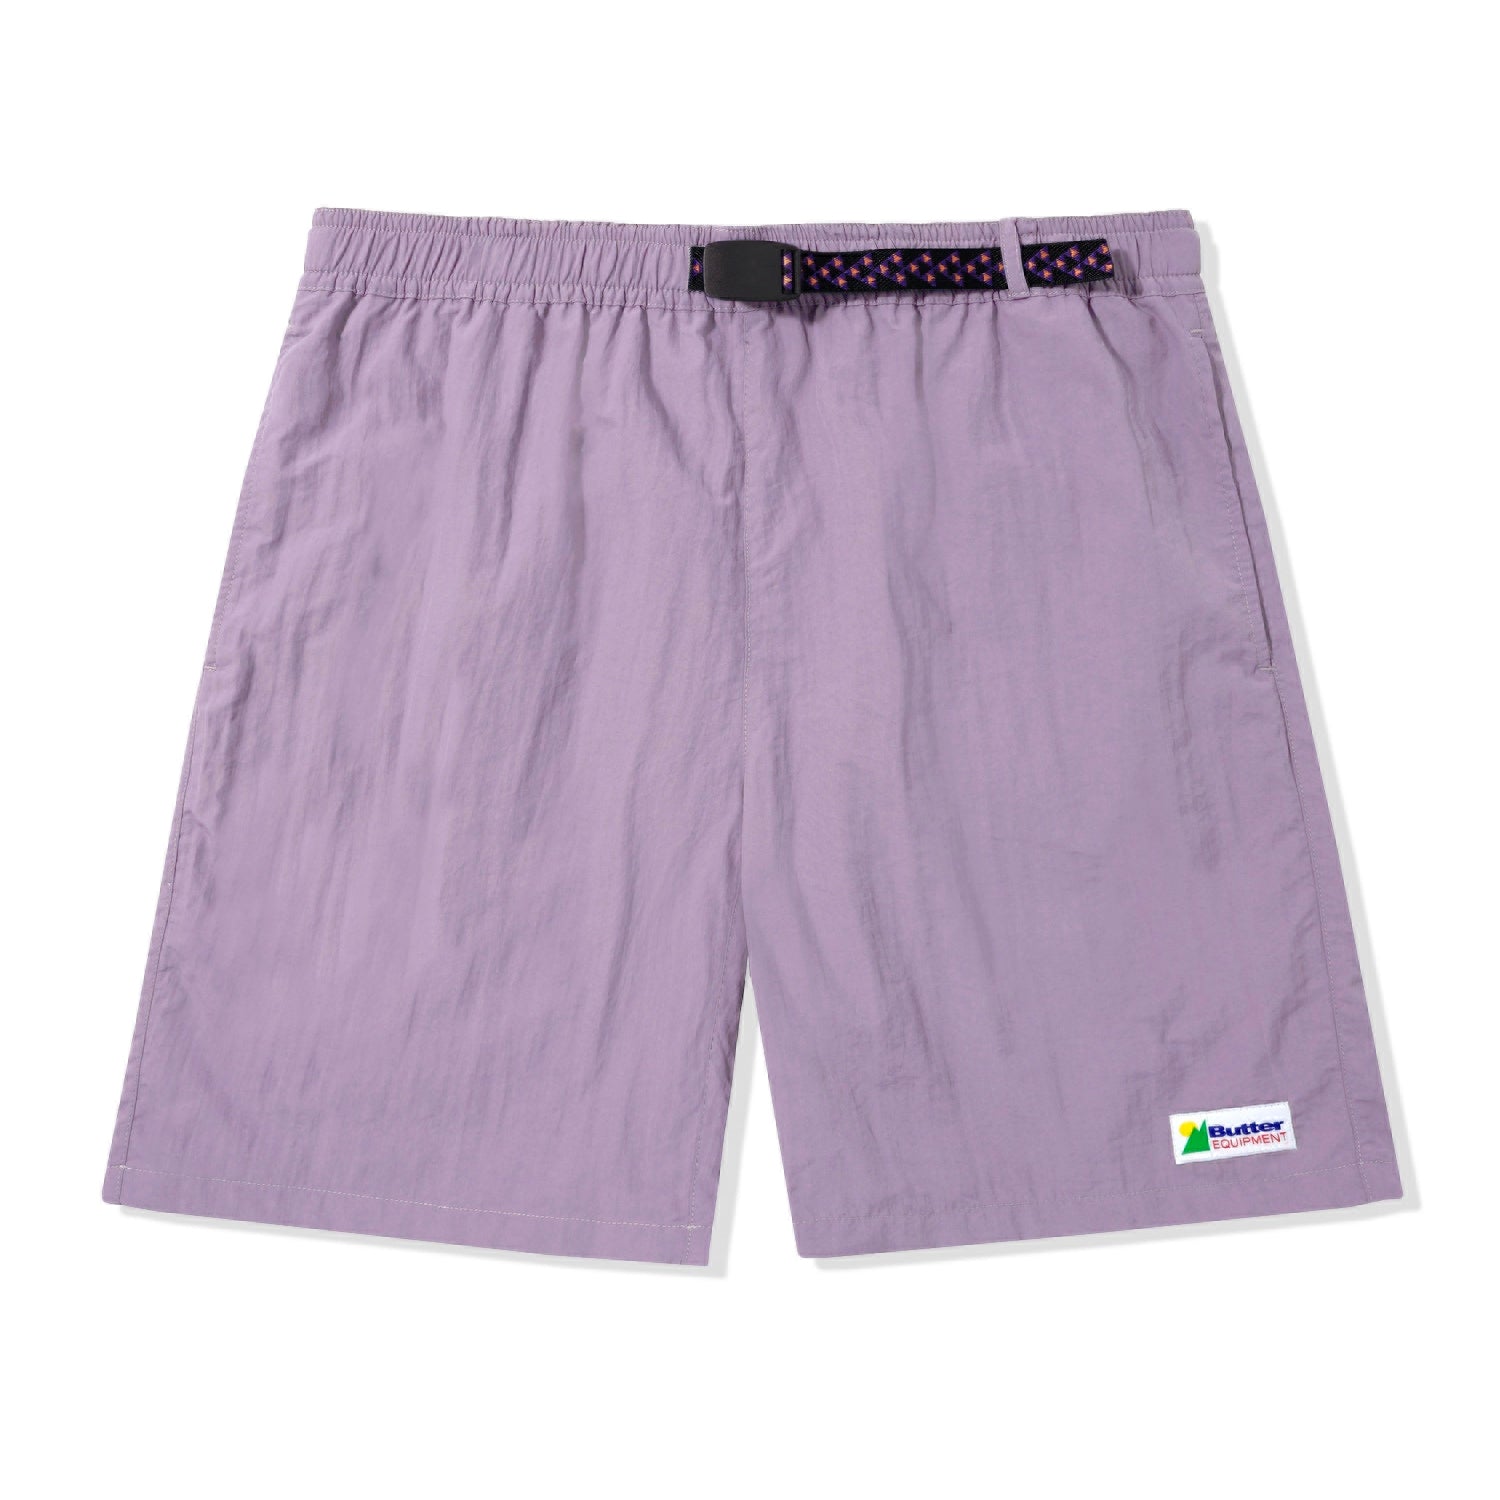 Equipment Shorts, Lilac